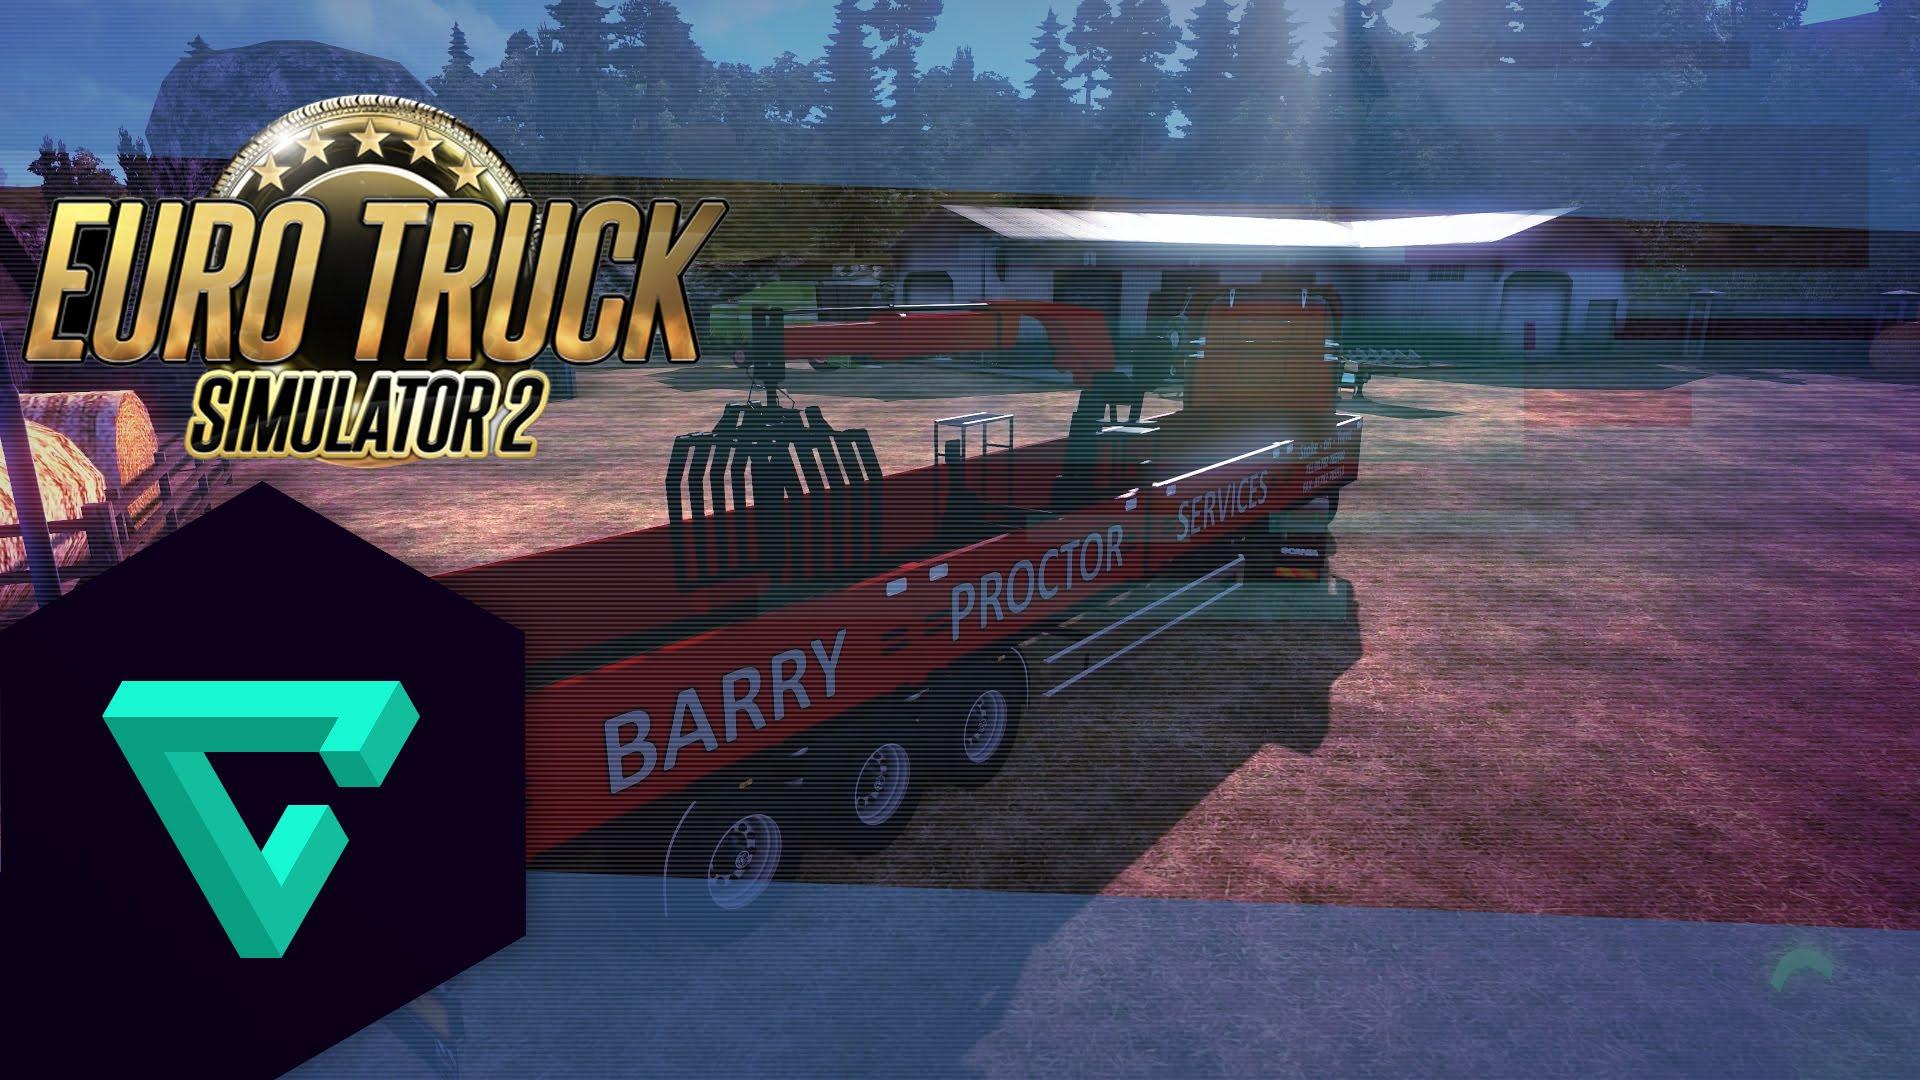 barry-proctor-brick-trailer_1